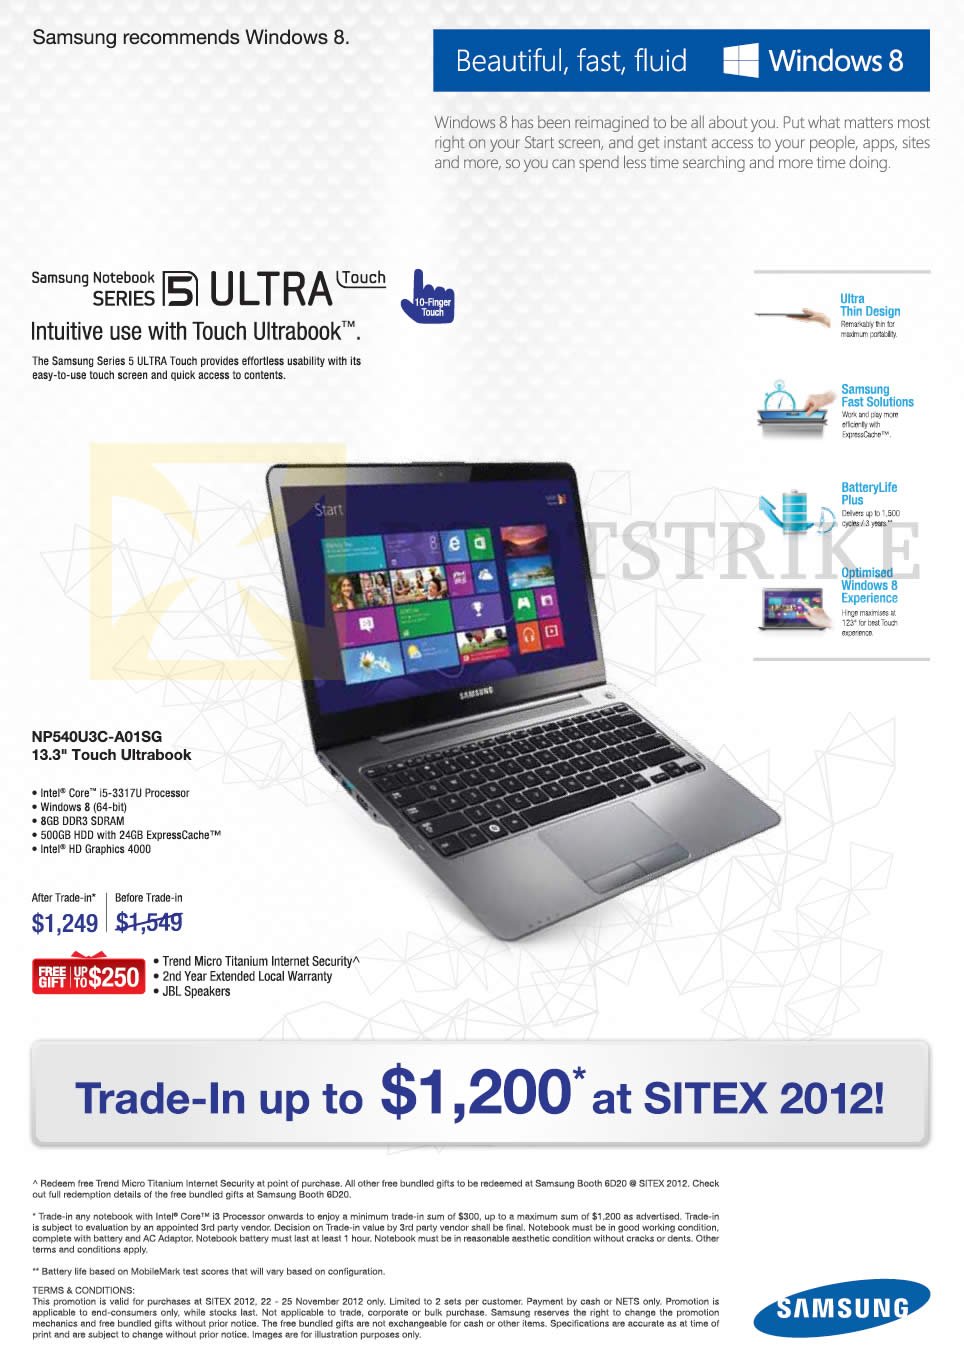 SITEX 2012 price list image brochure of Samsung Notebooks Ultrabook Series 5 NP540U3C-A01SG